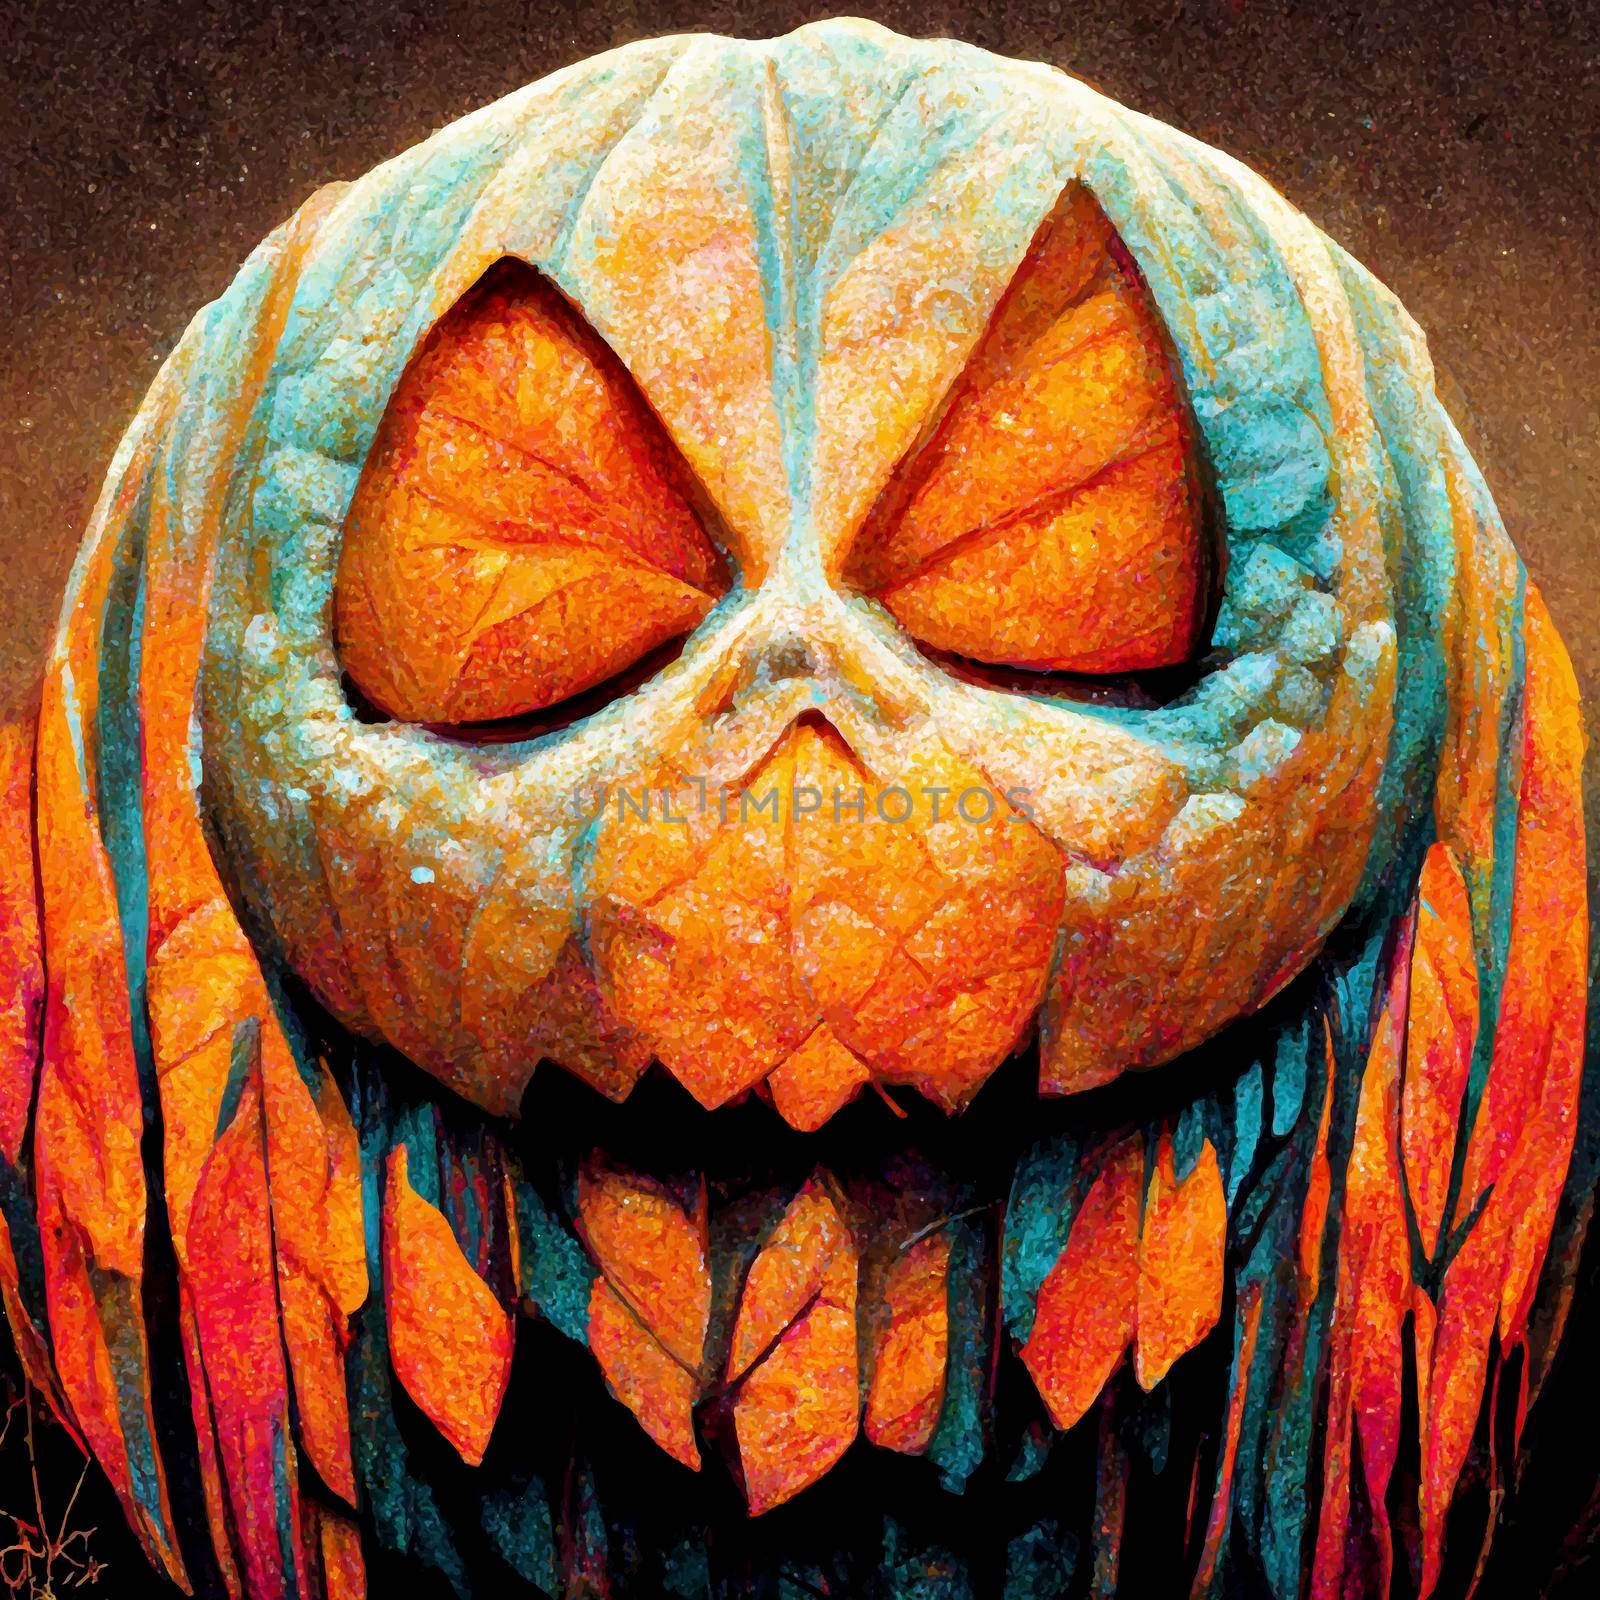 evil pumpkin realistic illustration. halloween themed illustration. by JpRamos